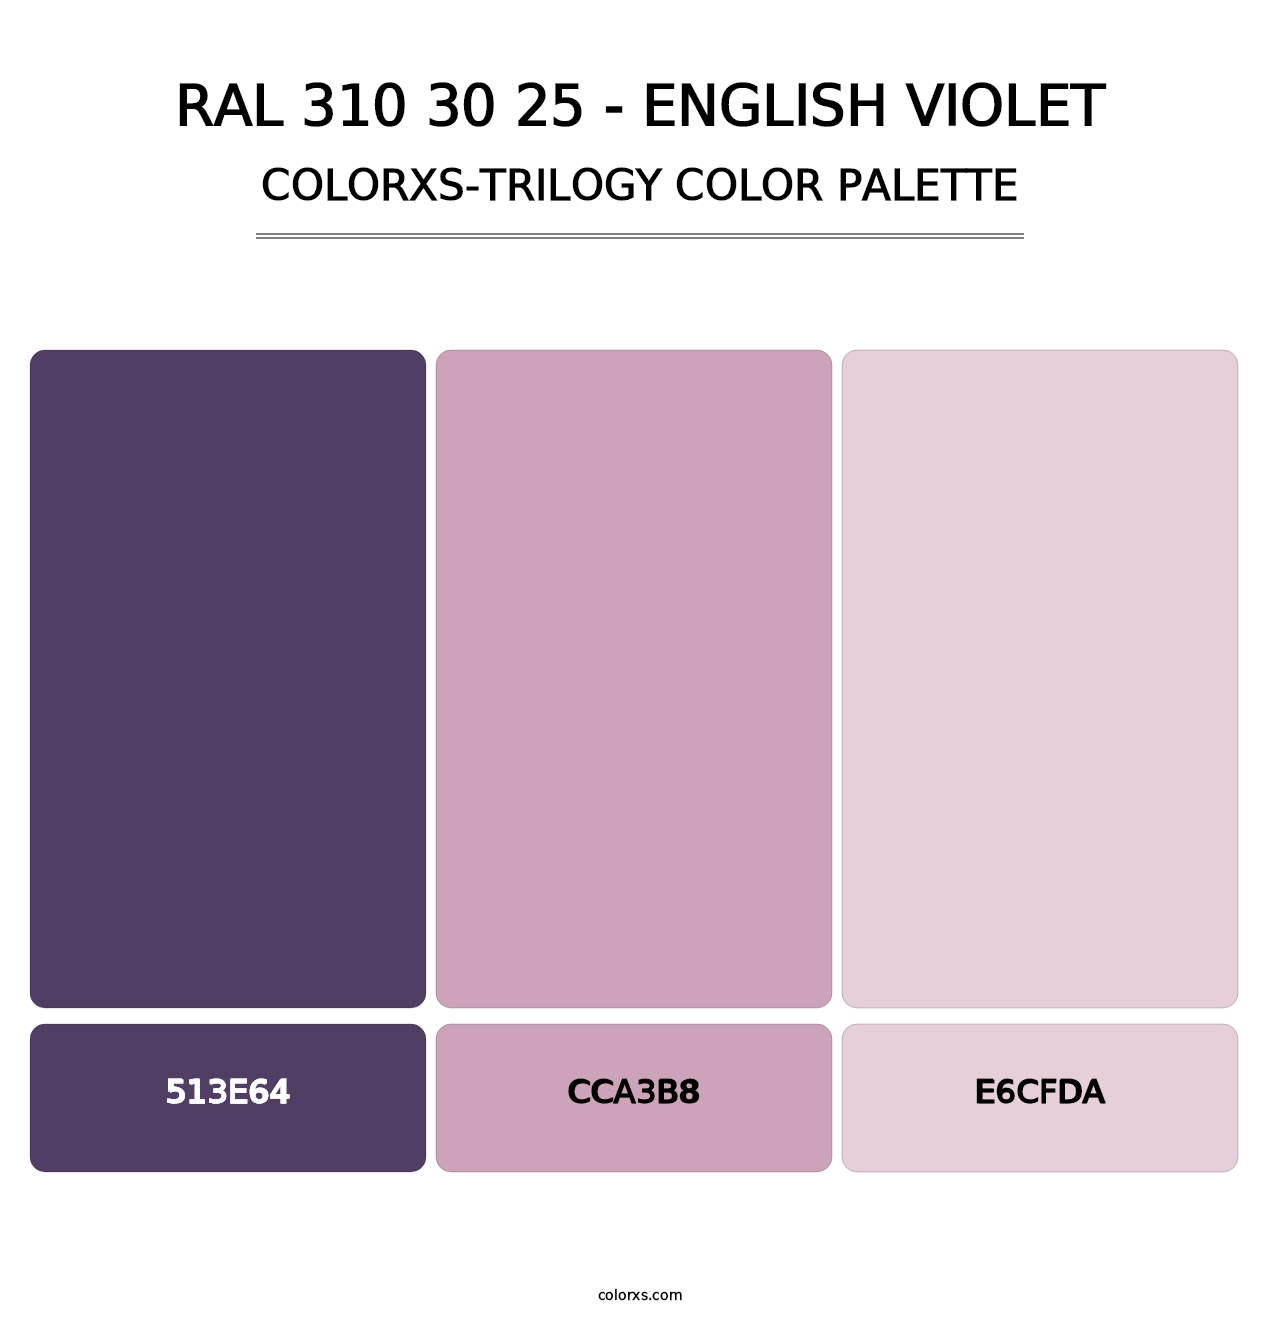 RAL 310 30 25 - English Violet - Colorxs Trilogy Palette